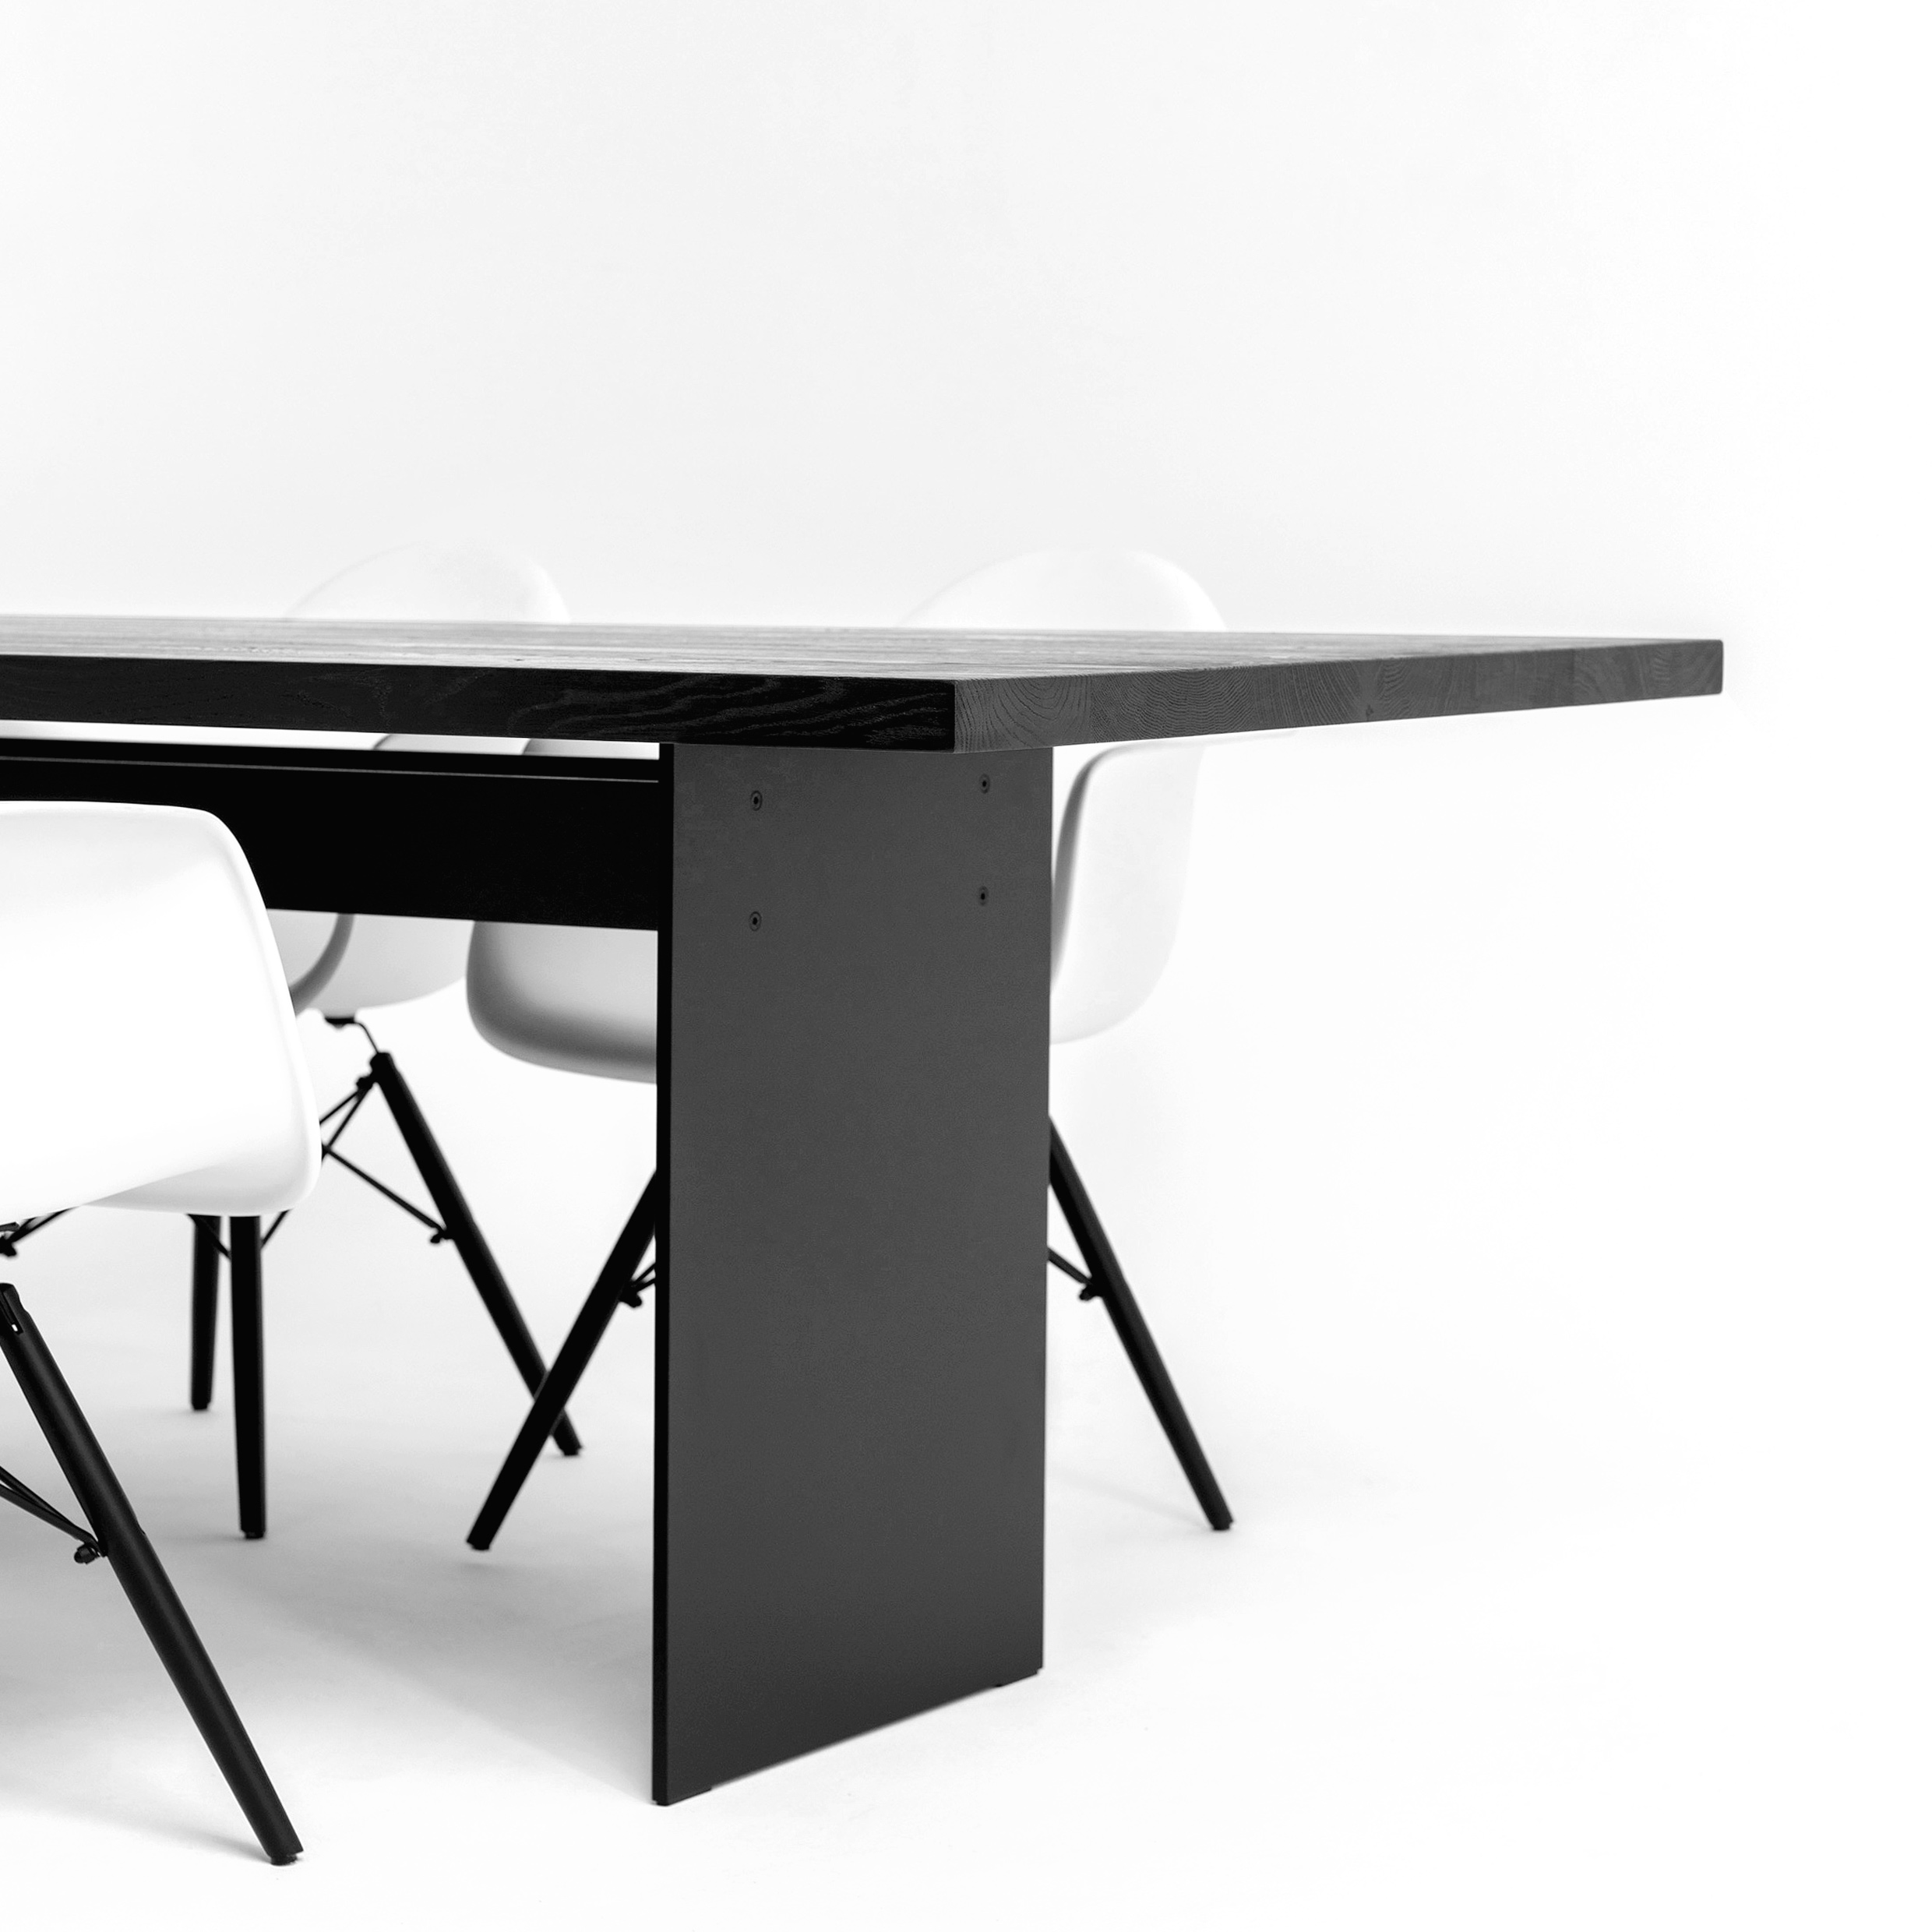 FORM EXCLUSIVE // FYNN - DINING TABLE | GERMAN OAK | WHITE OILED - SLEEK BLACK - 180CM X 90CM X 4CM